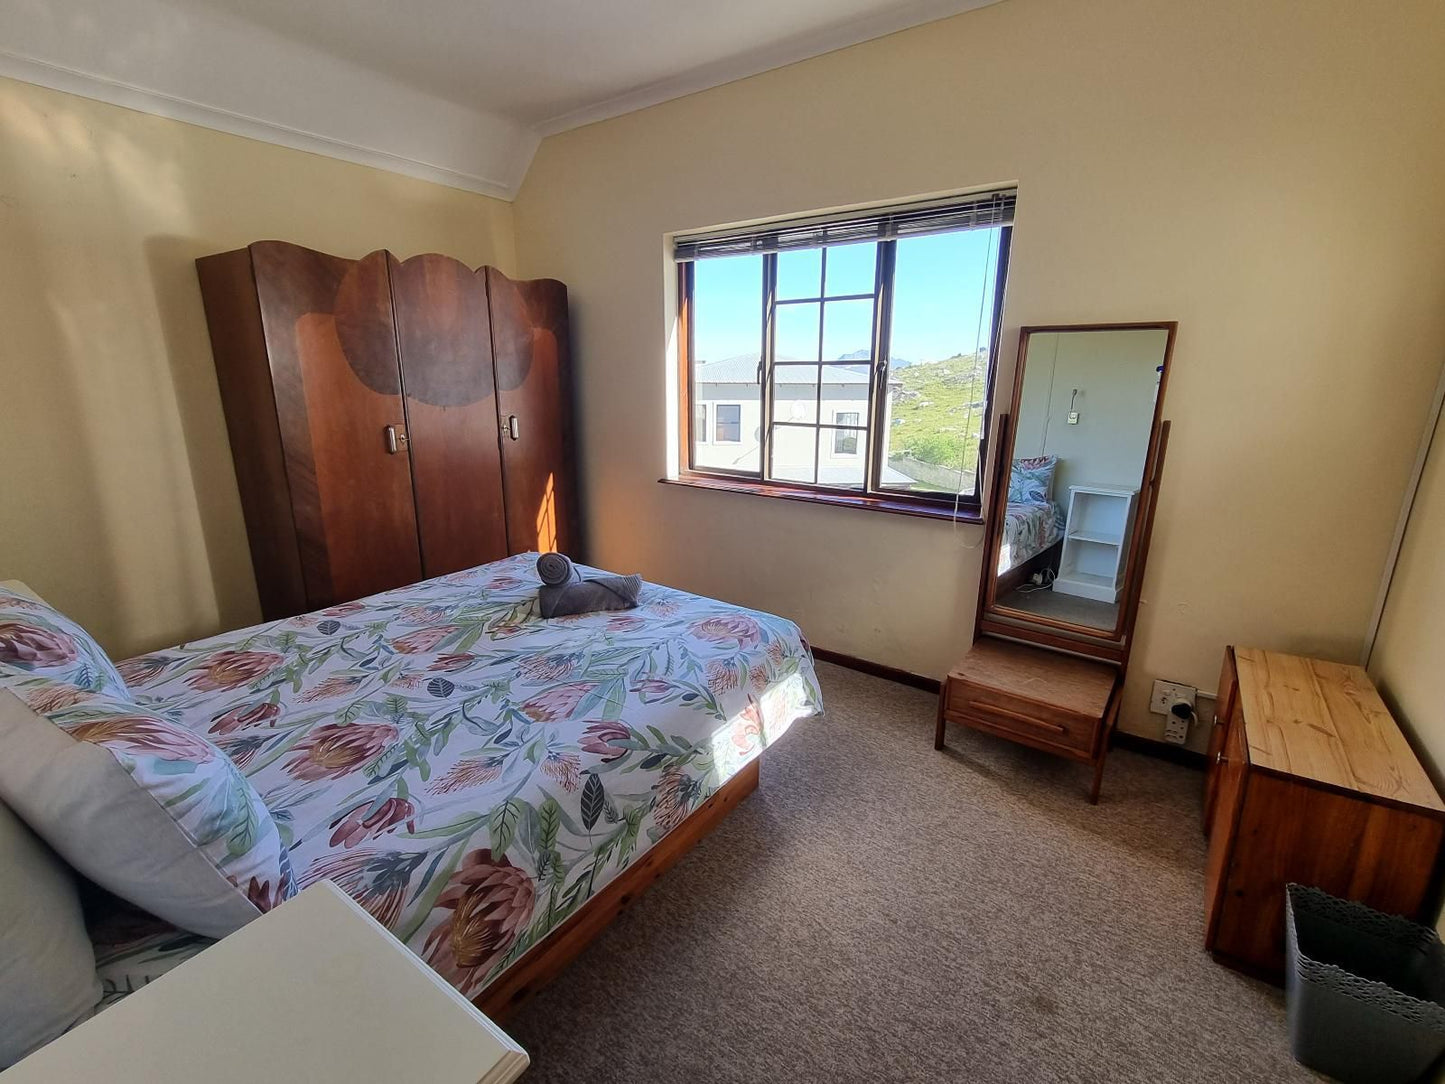 Suikerbekkie Bettys Bay Western Cape South Africa Window, Architecture, Bedroom